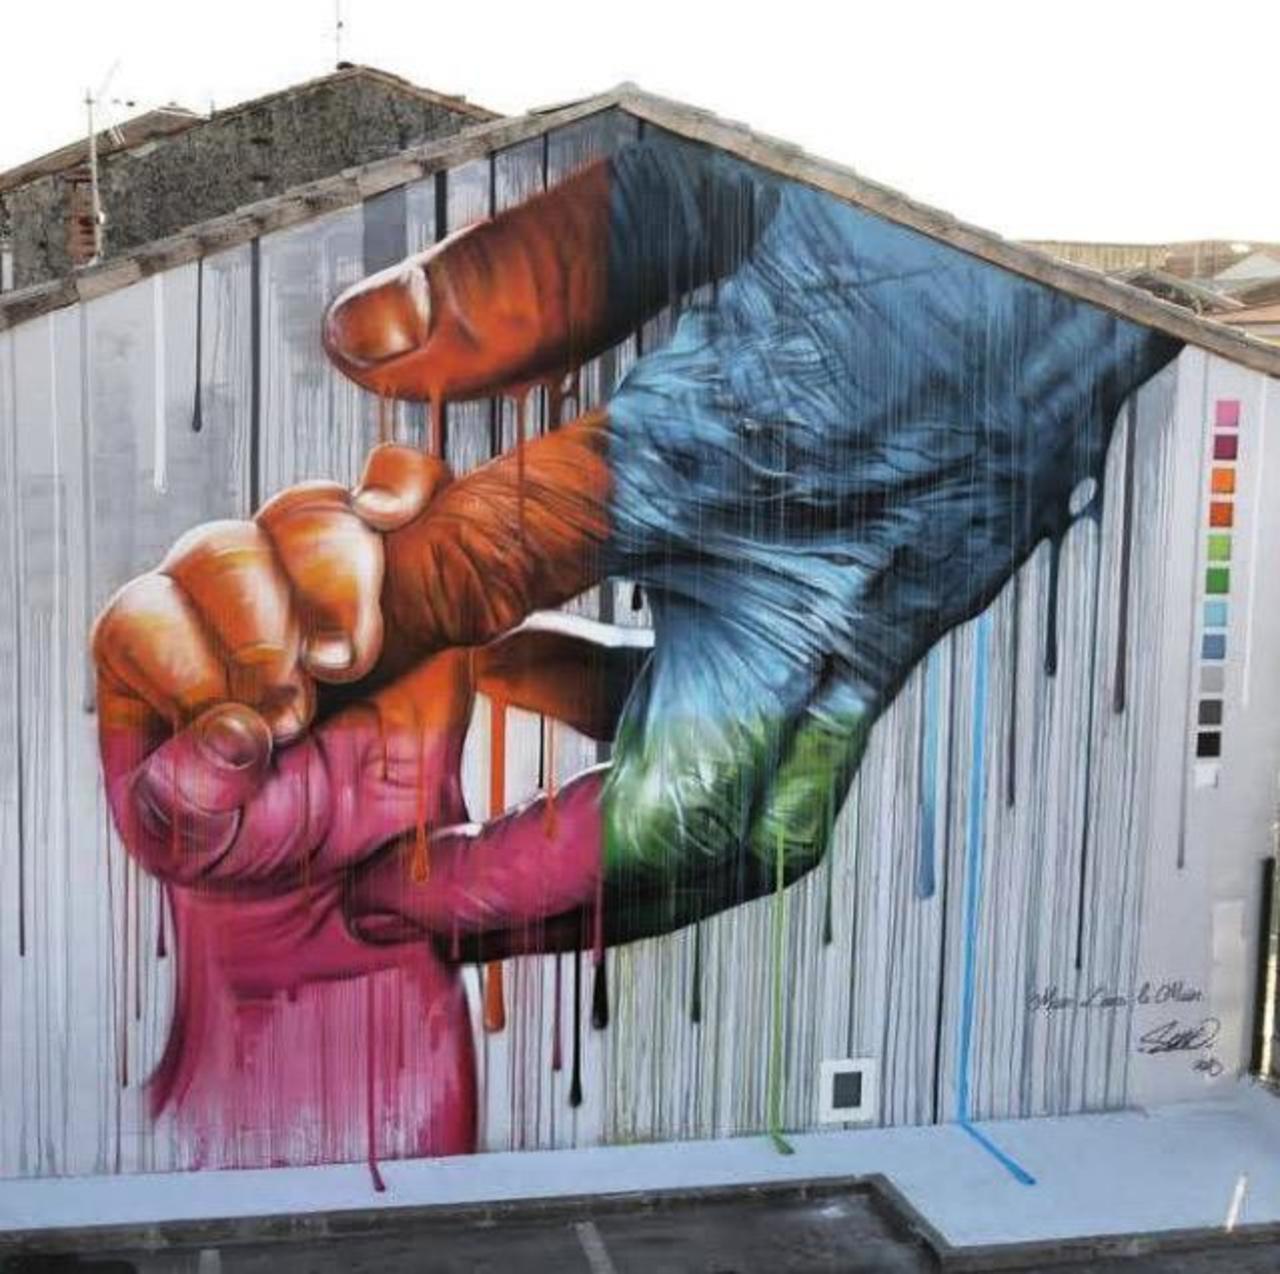 Seno Street Art 

#art #graffiti #mural #streetart http://t.co/7iMfW0pHMJ